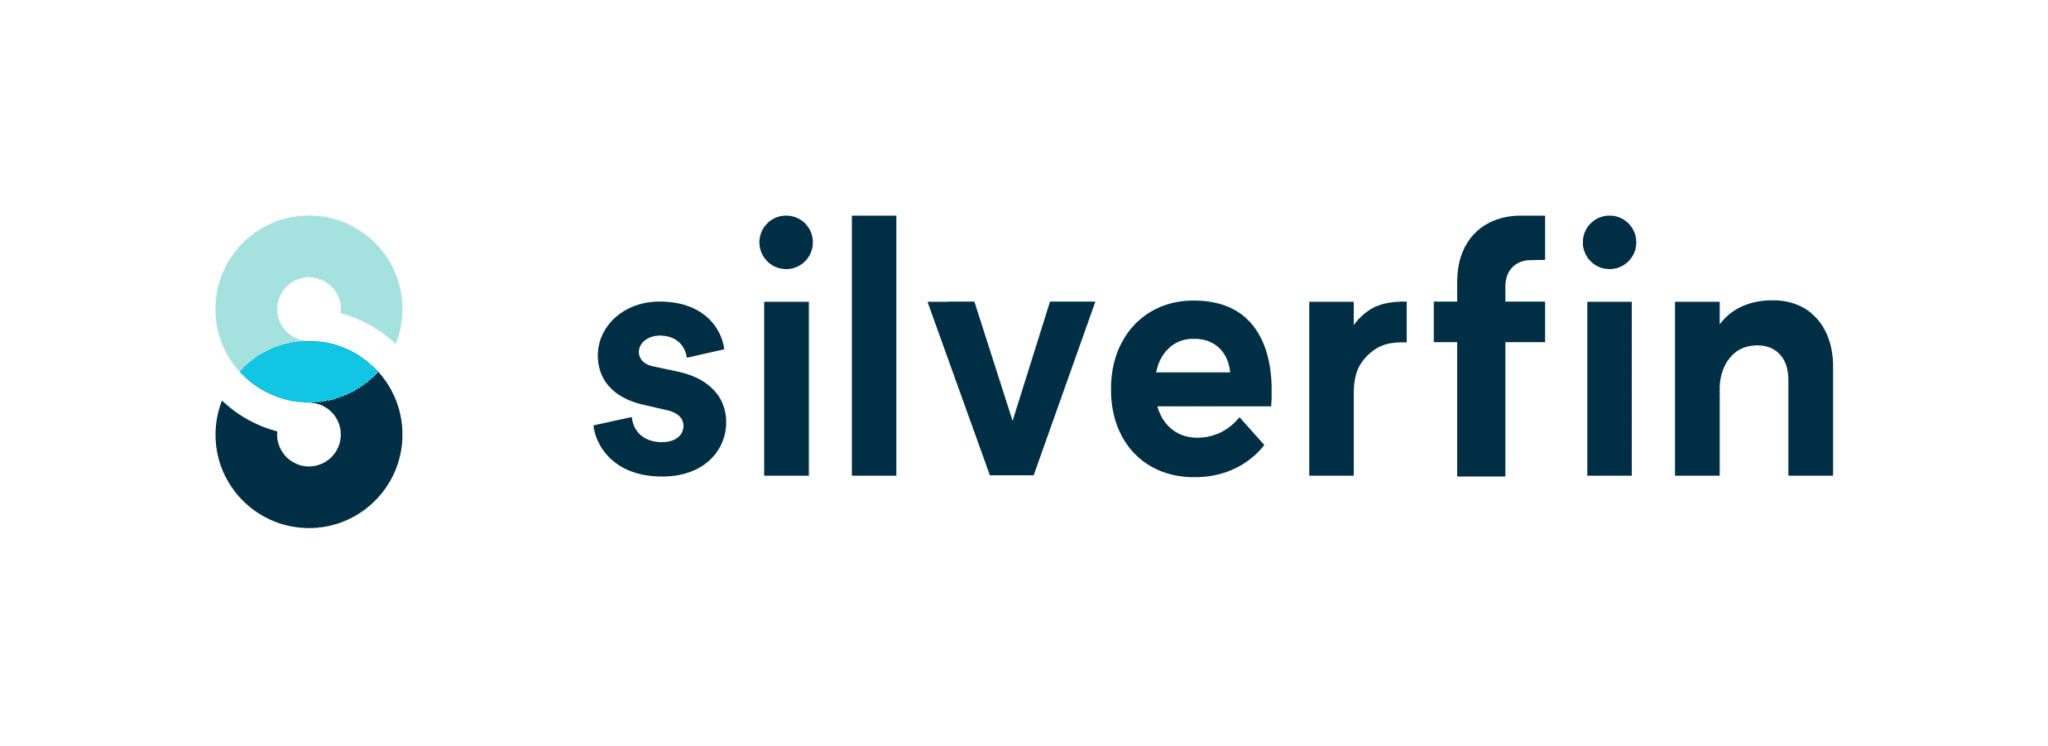 Silverfin-SF_POS_LOGO_RGB_HORIZONTAL-2-2048x746